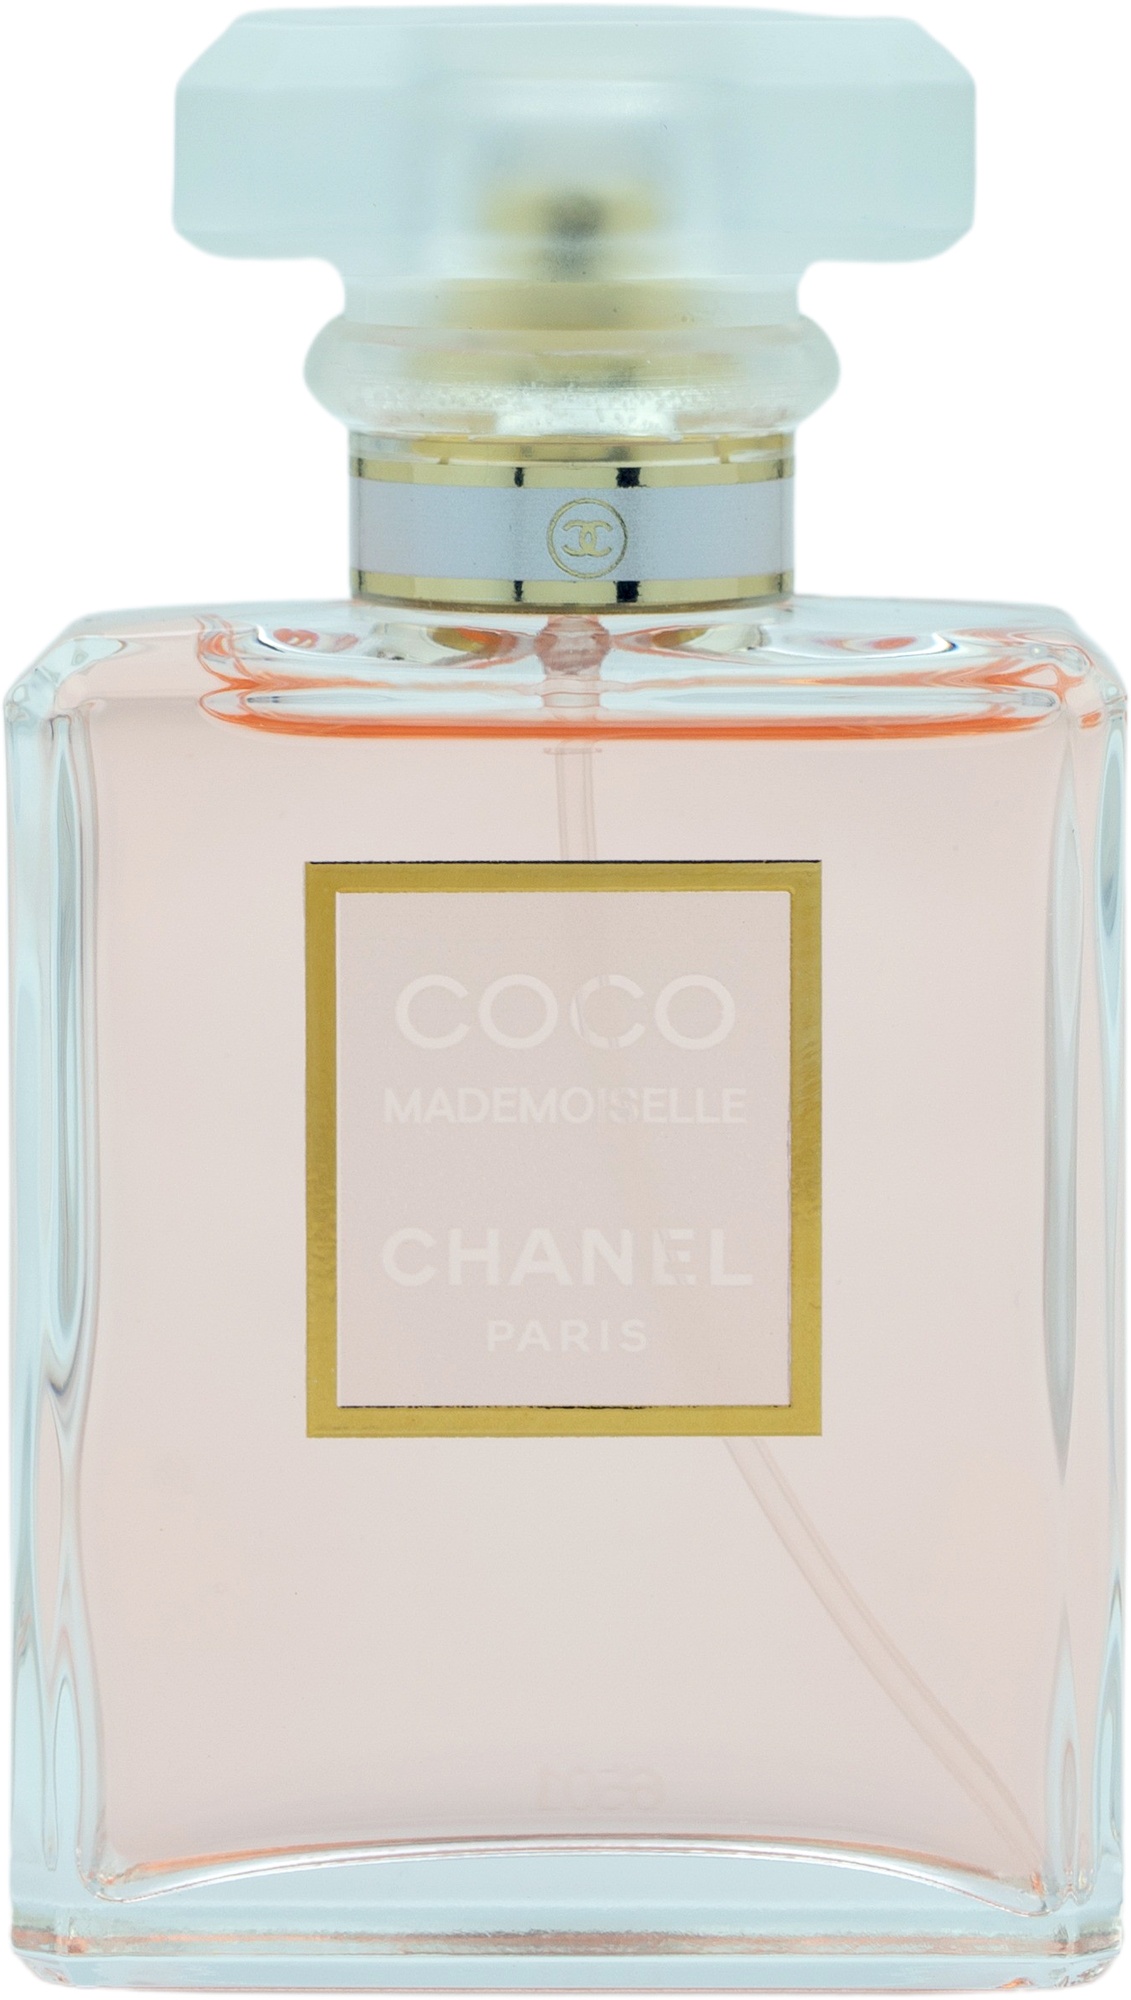 Bild Coco Mademoiselle Eau de Parfum 100 ml